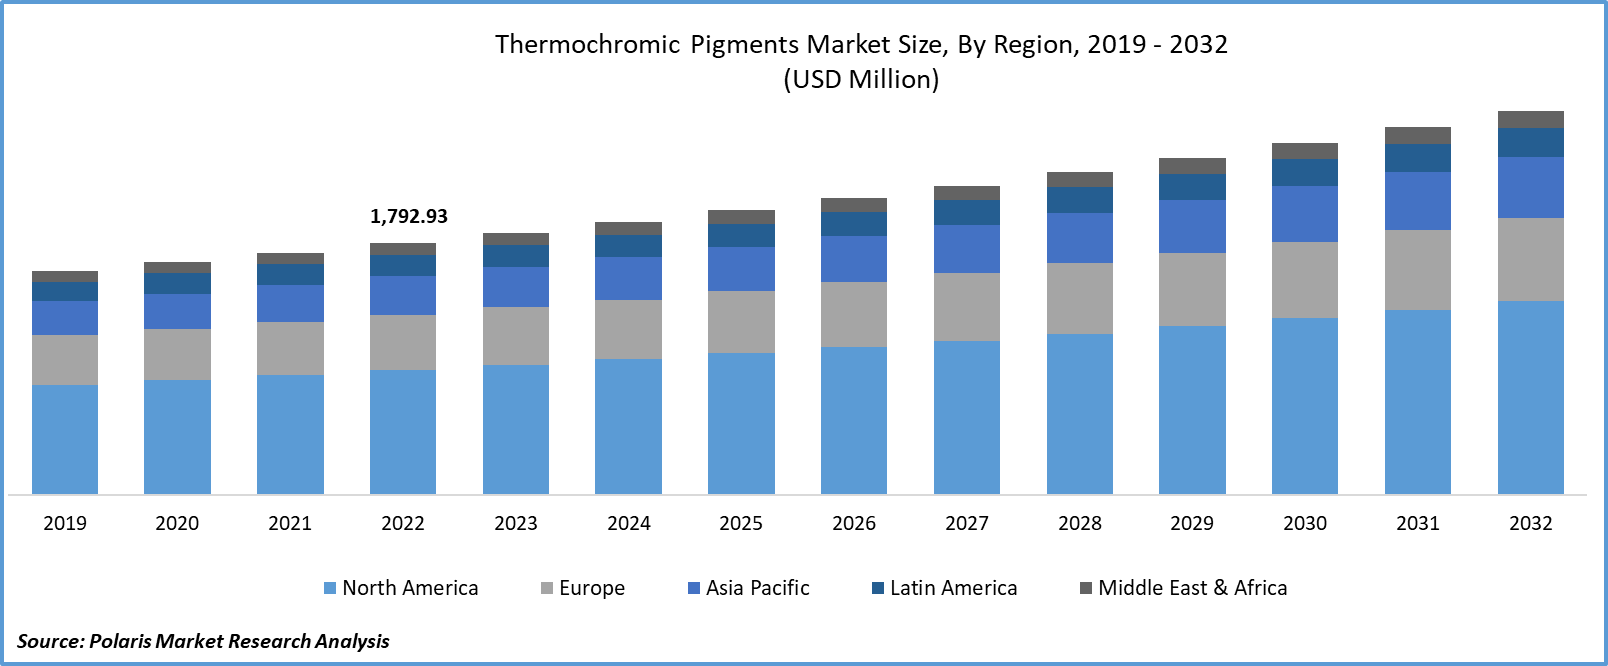 Thermochromic Pigments Market Size